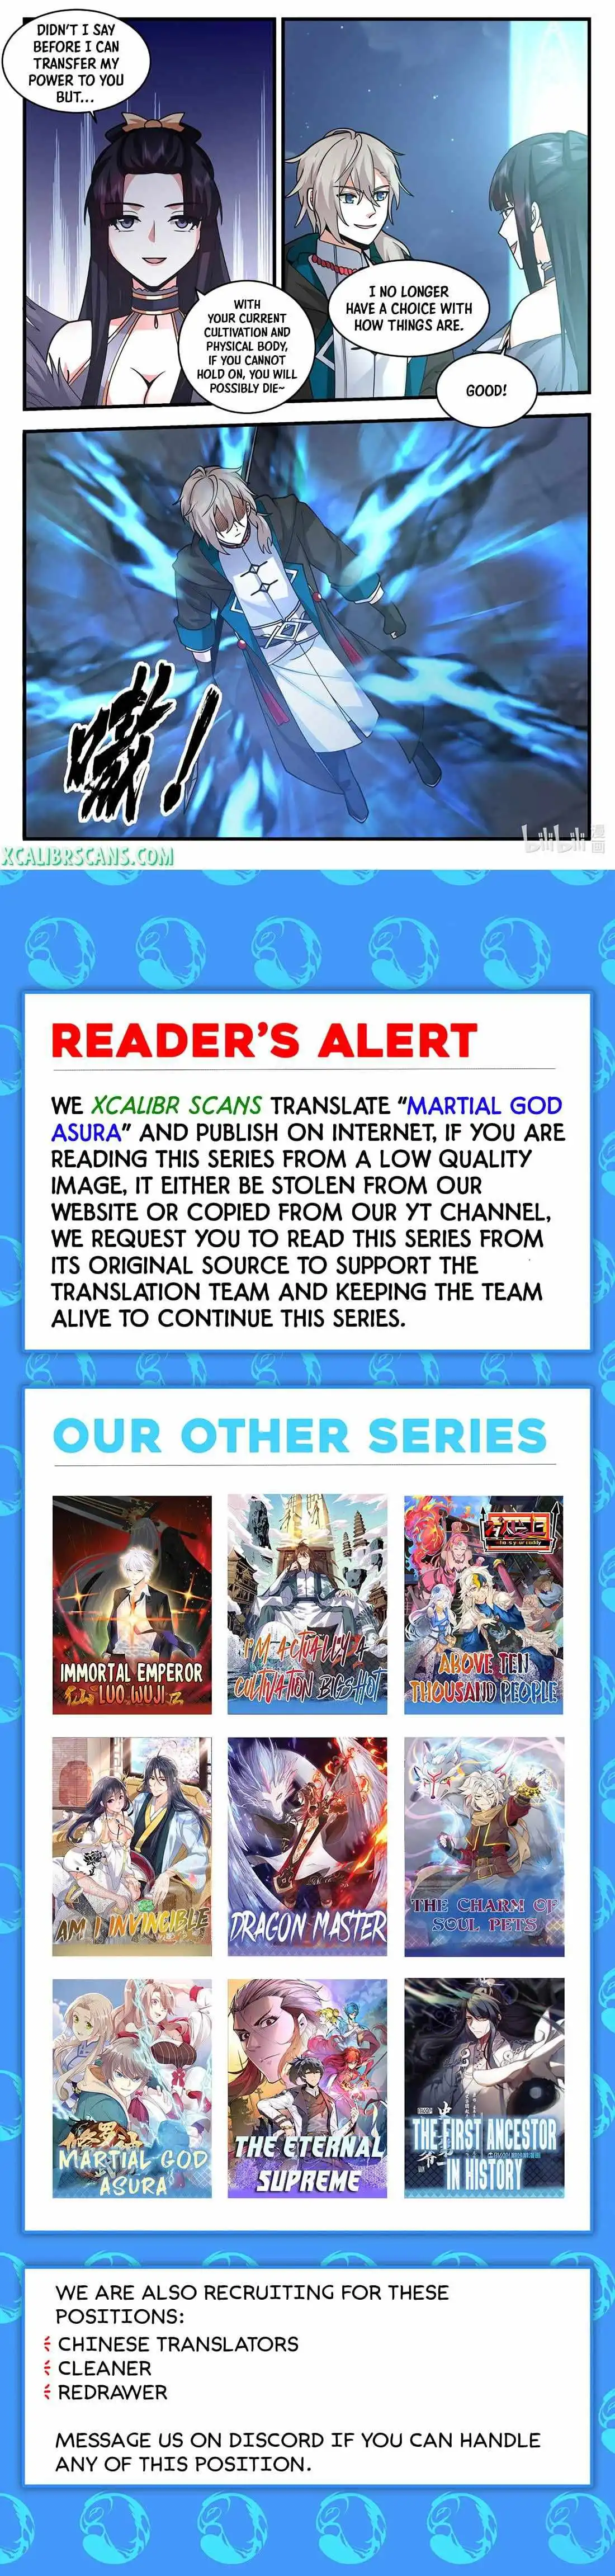 Martial God Asura Chapter 538